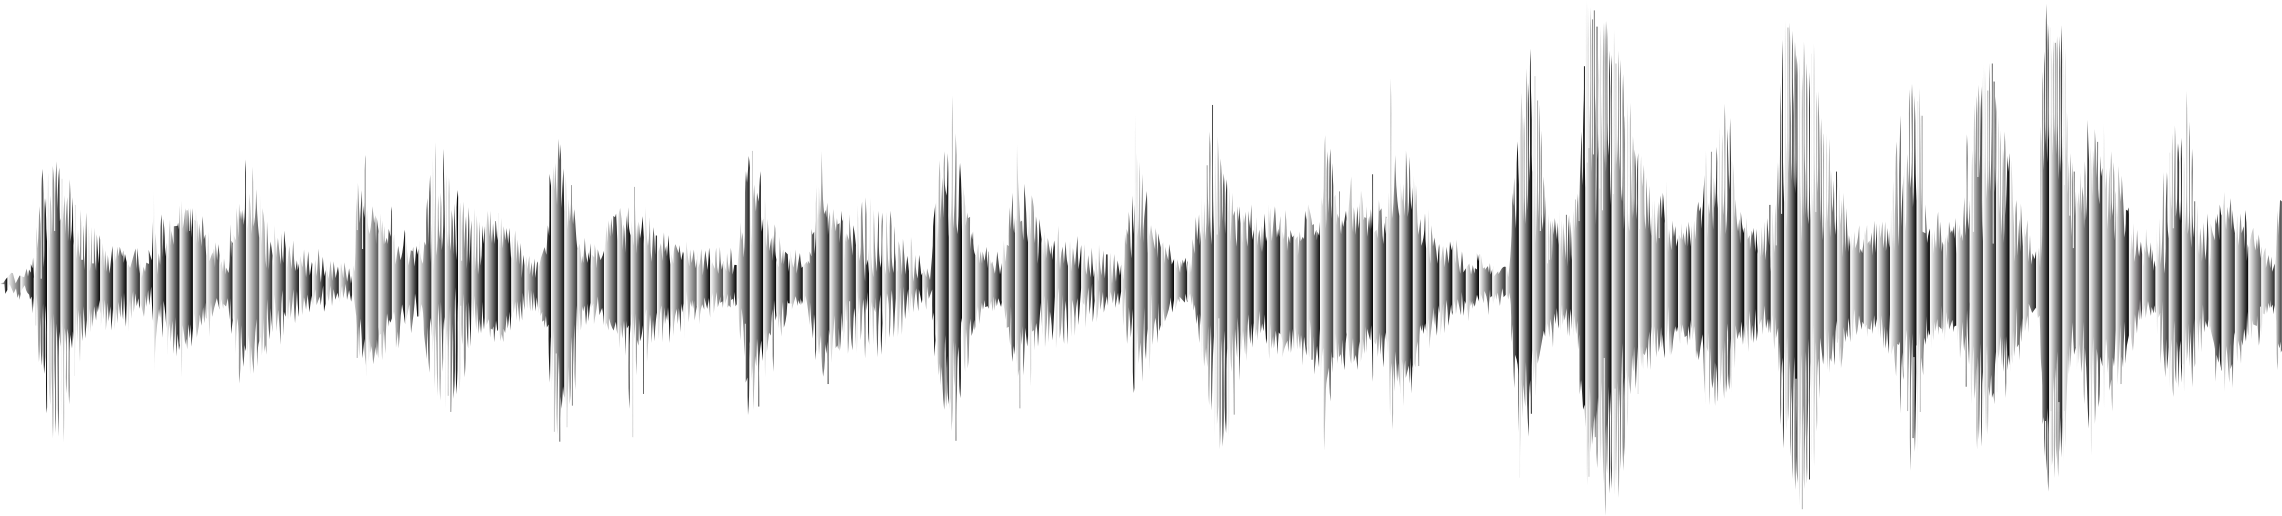 Audio Waveform Visualization PNG